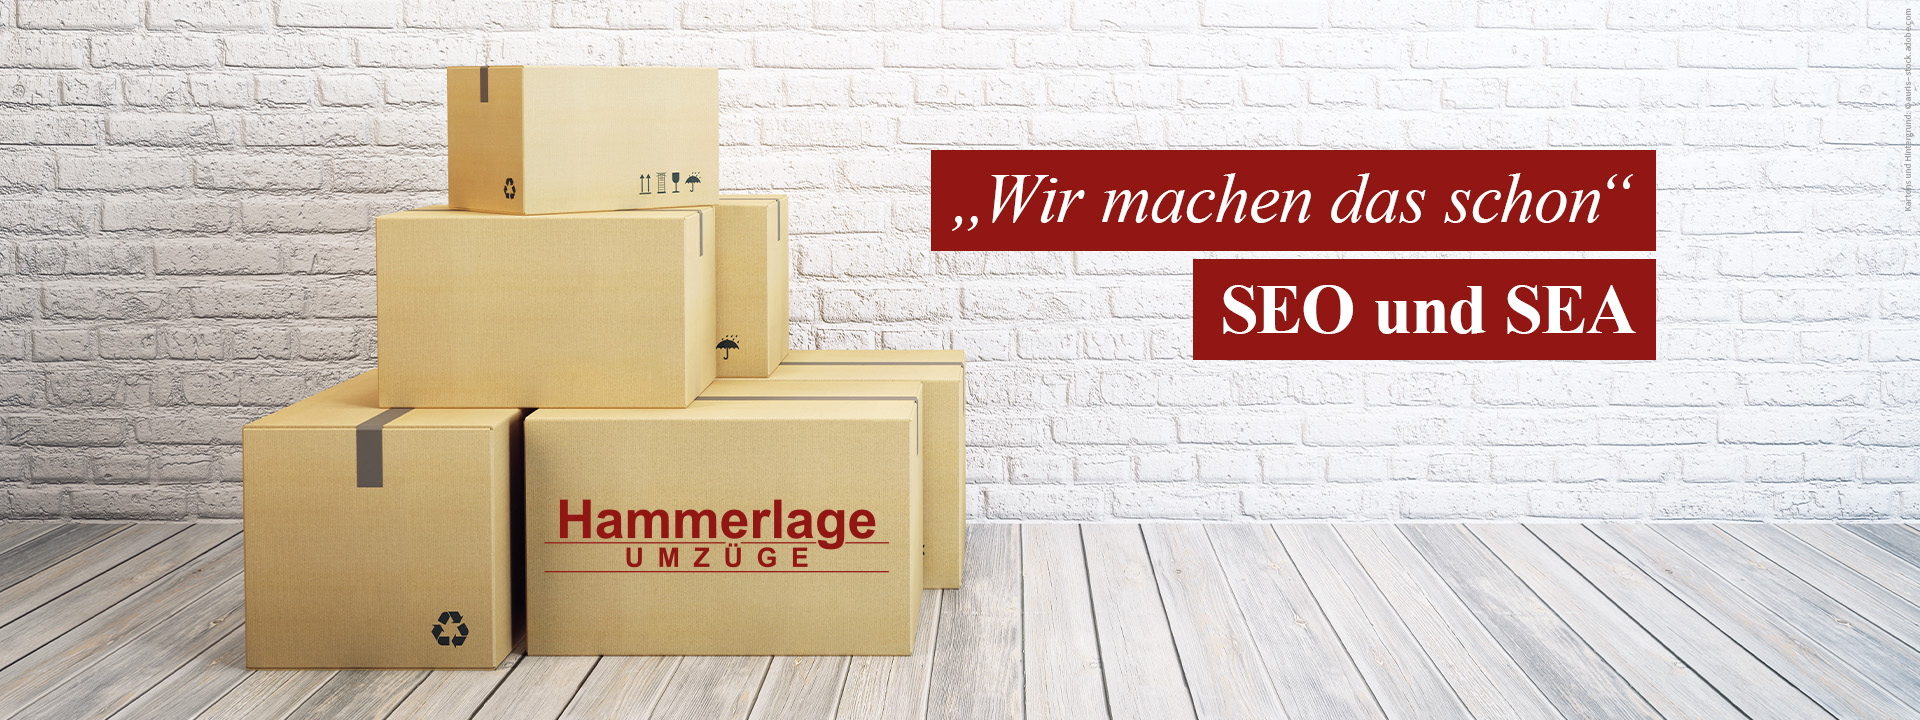 Hammerlage GmbH - SEA